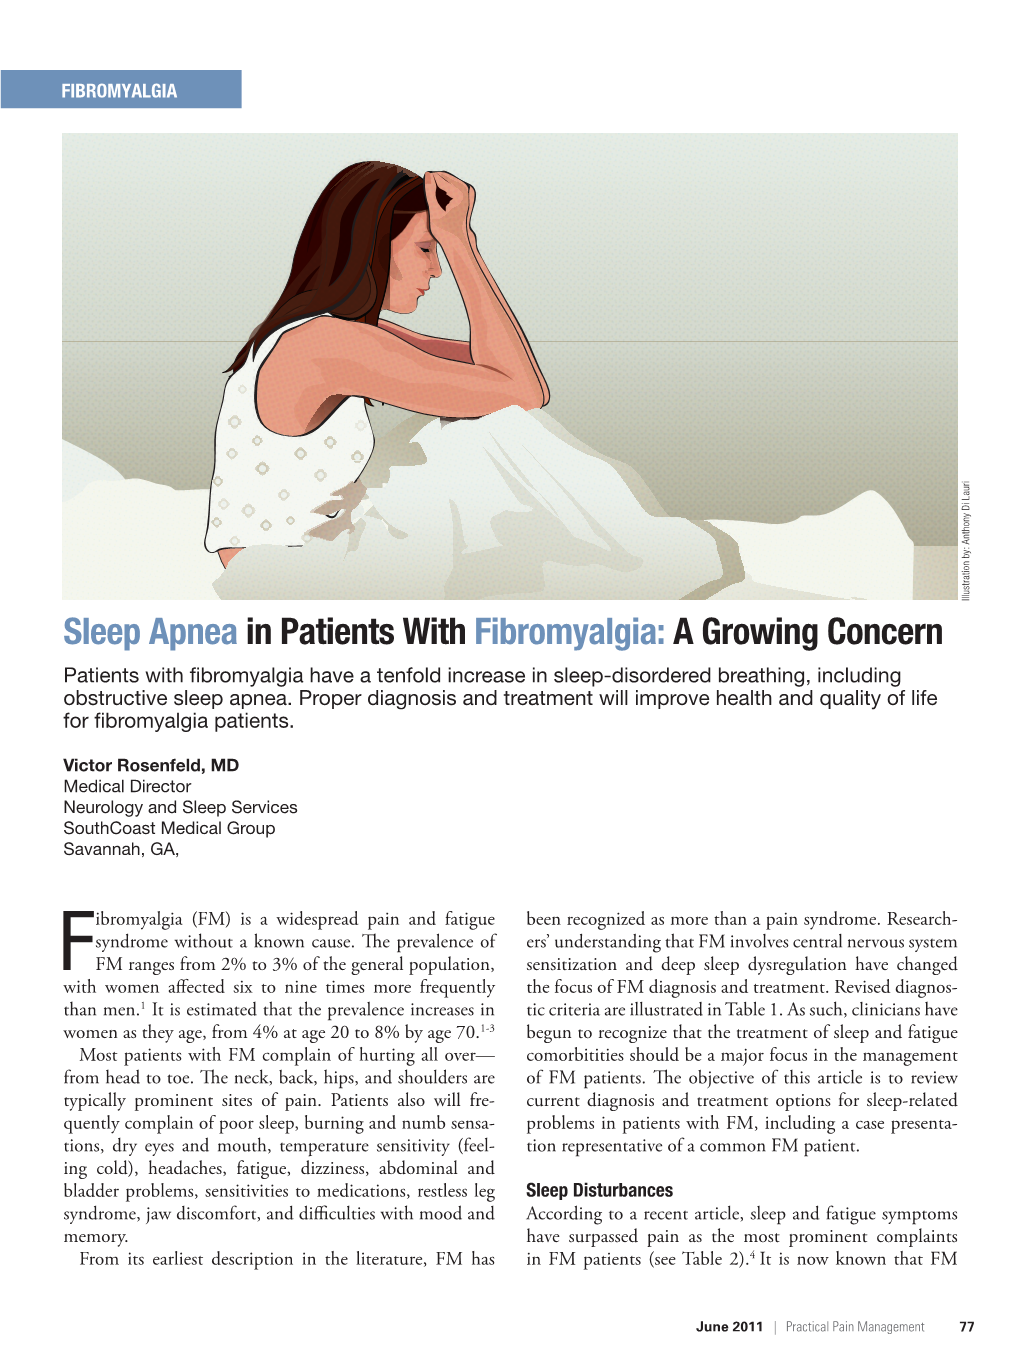 Sleep Apnea in Patients with Fibromyalgia: a Growing Concern